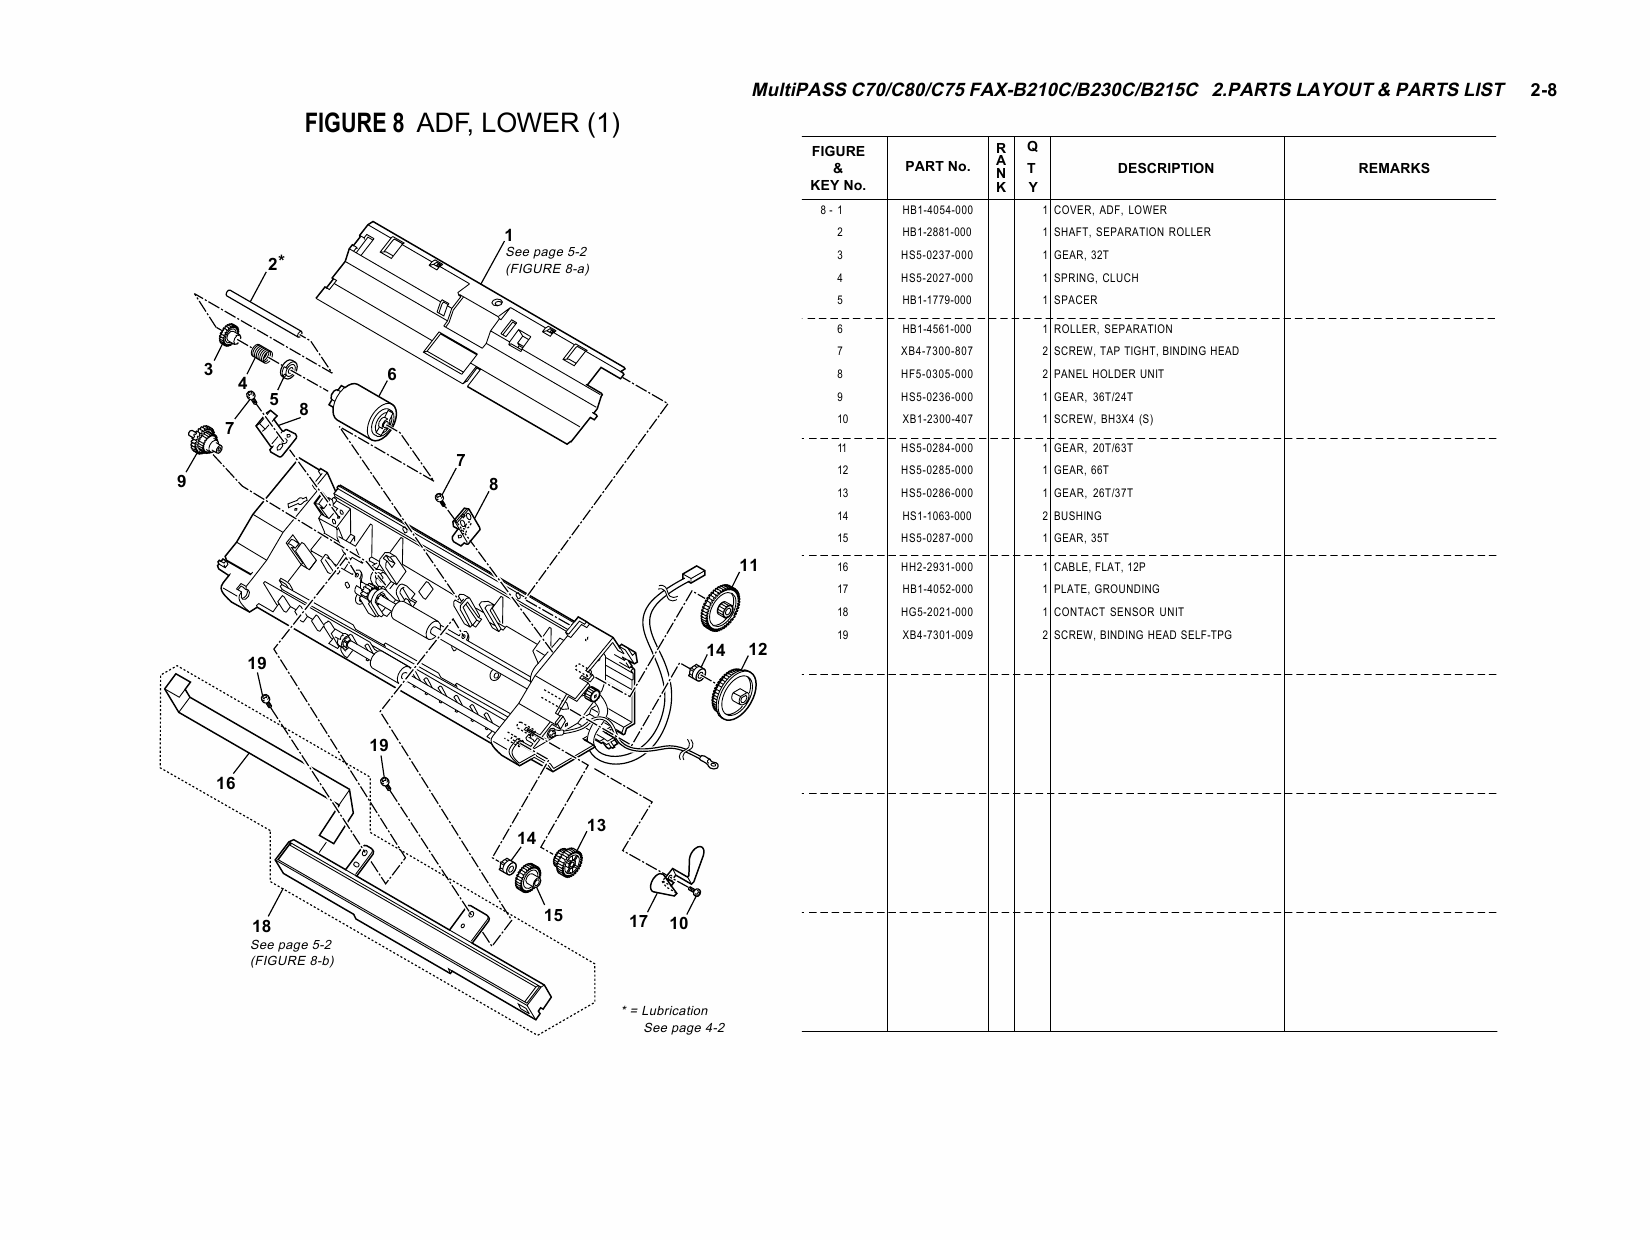 Canon MultiPASS MP-C70 C80 C75 Parts Catalog Manual-3